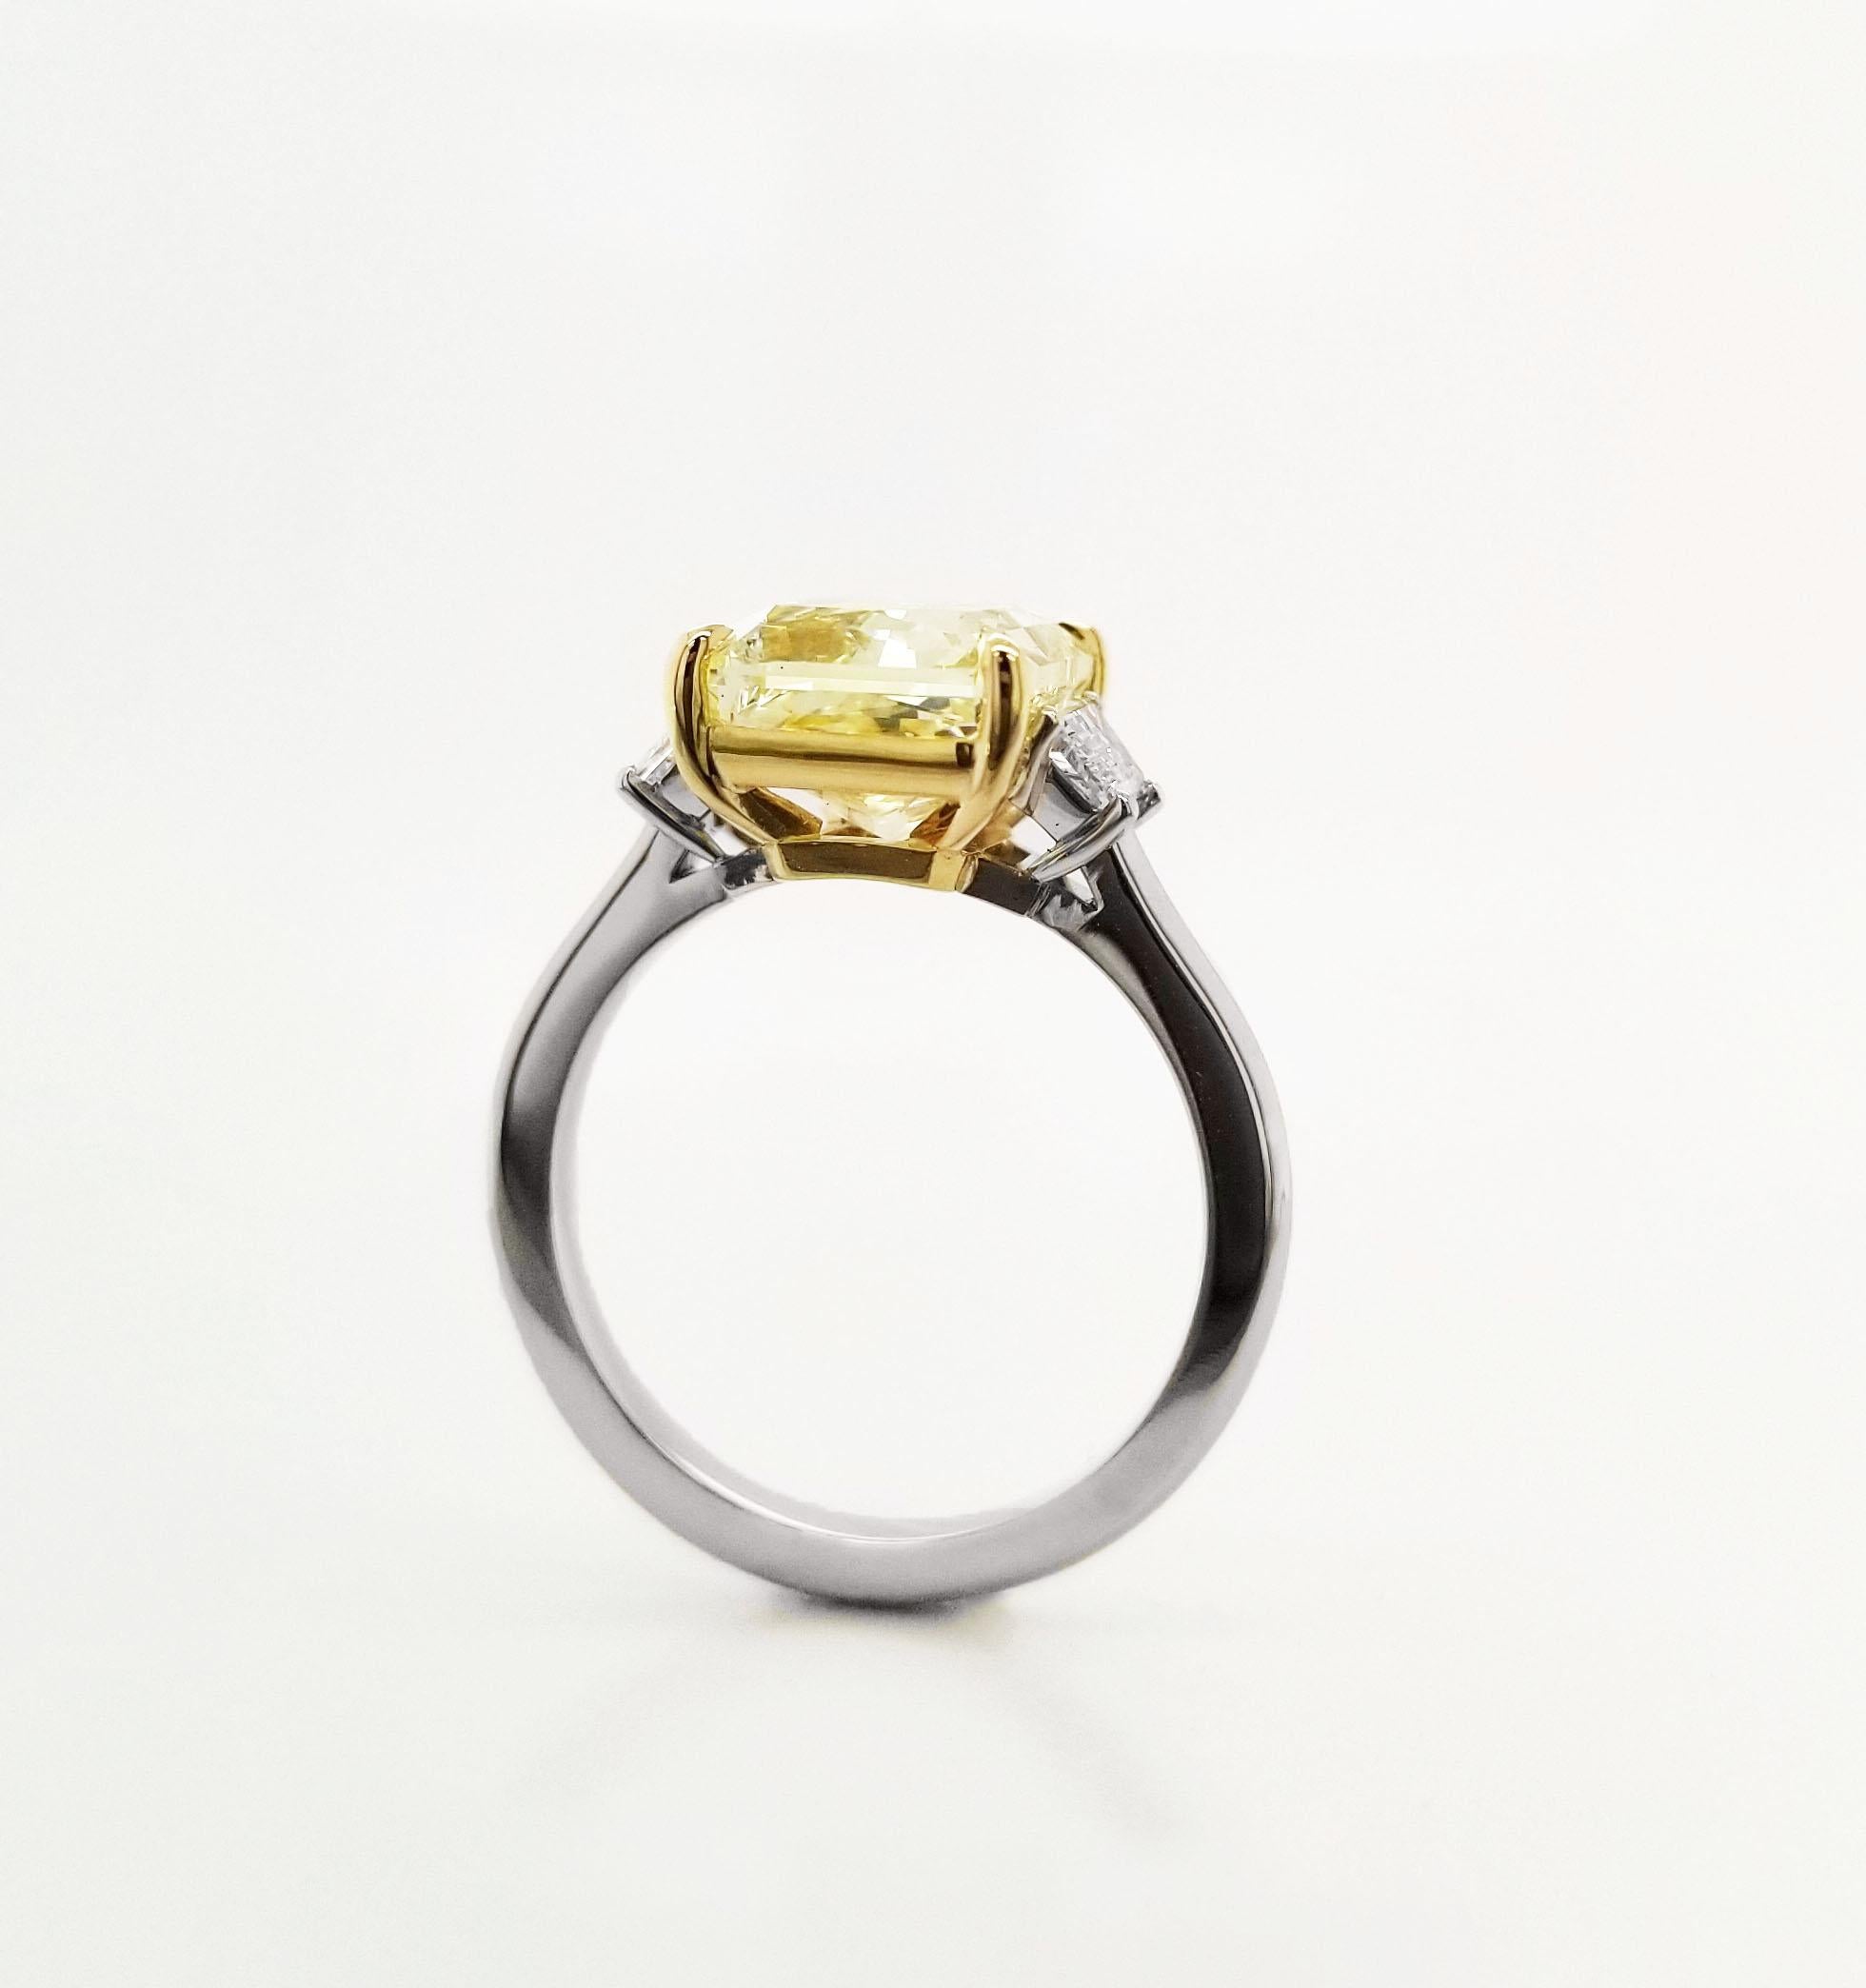 Contemporary SCARSELLI 5 Carat Fancy Light Yellow Diamond Ring in Platinum & 18k